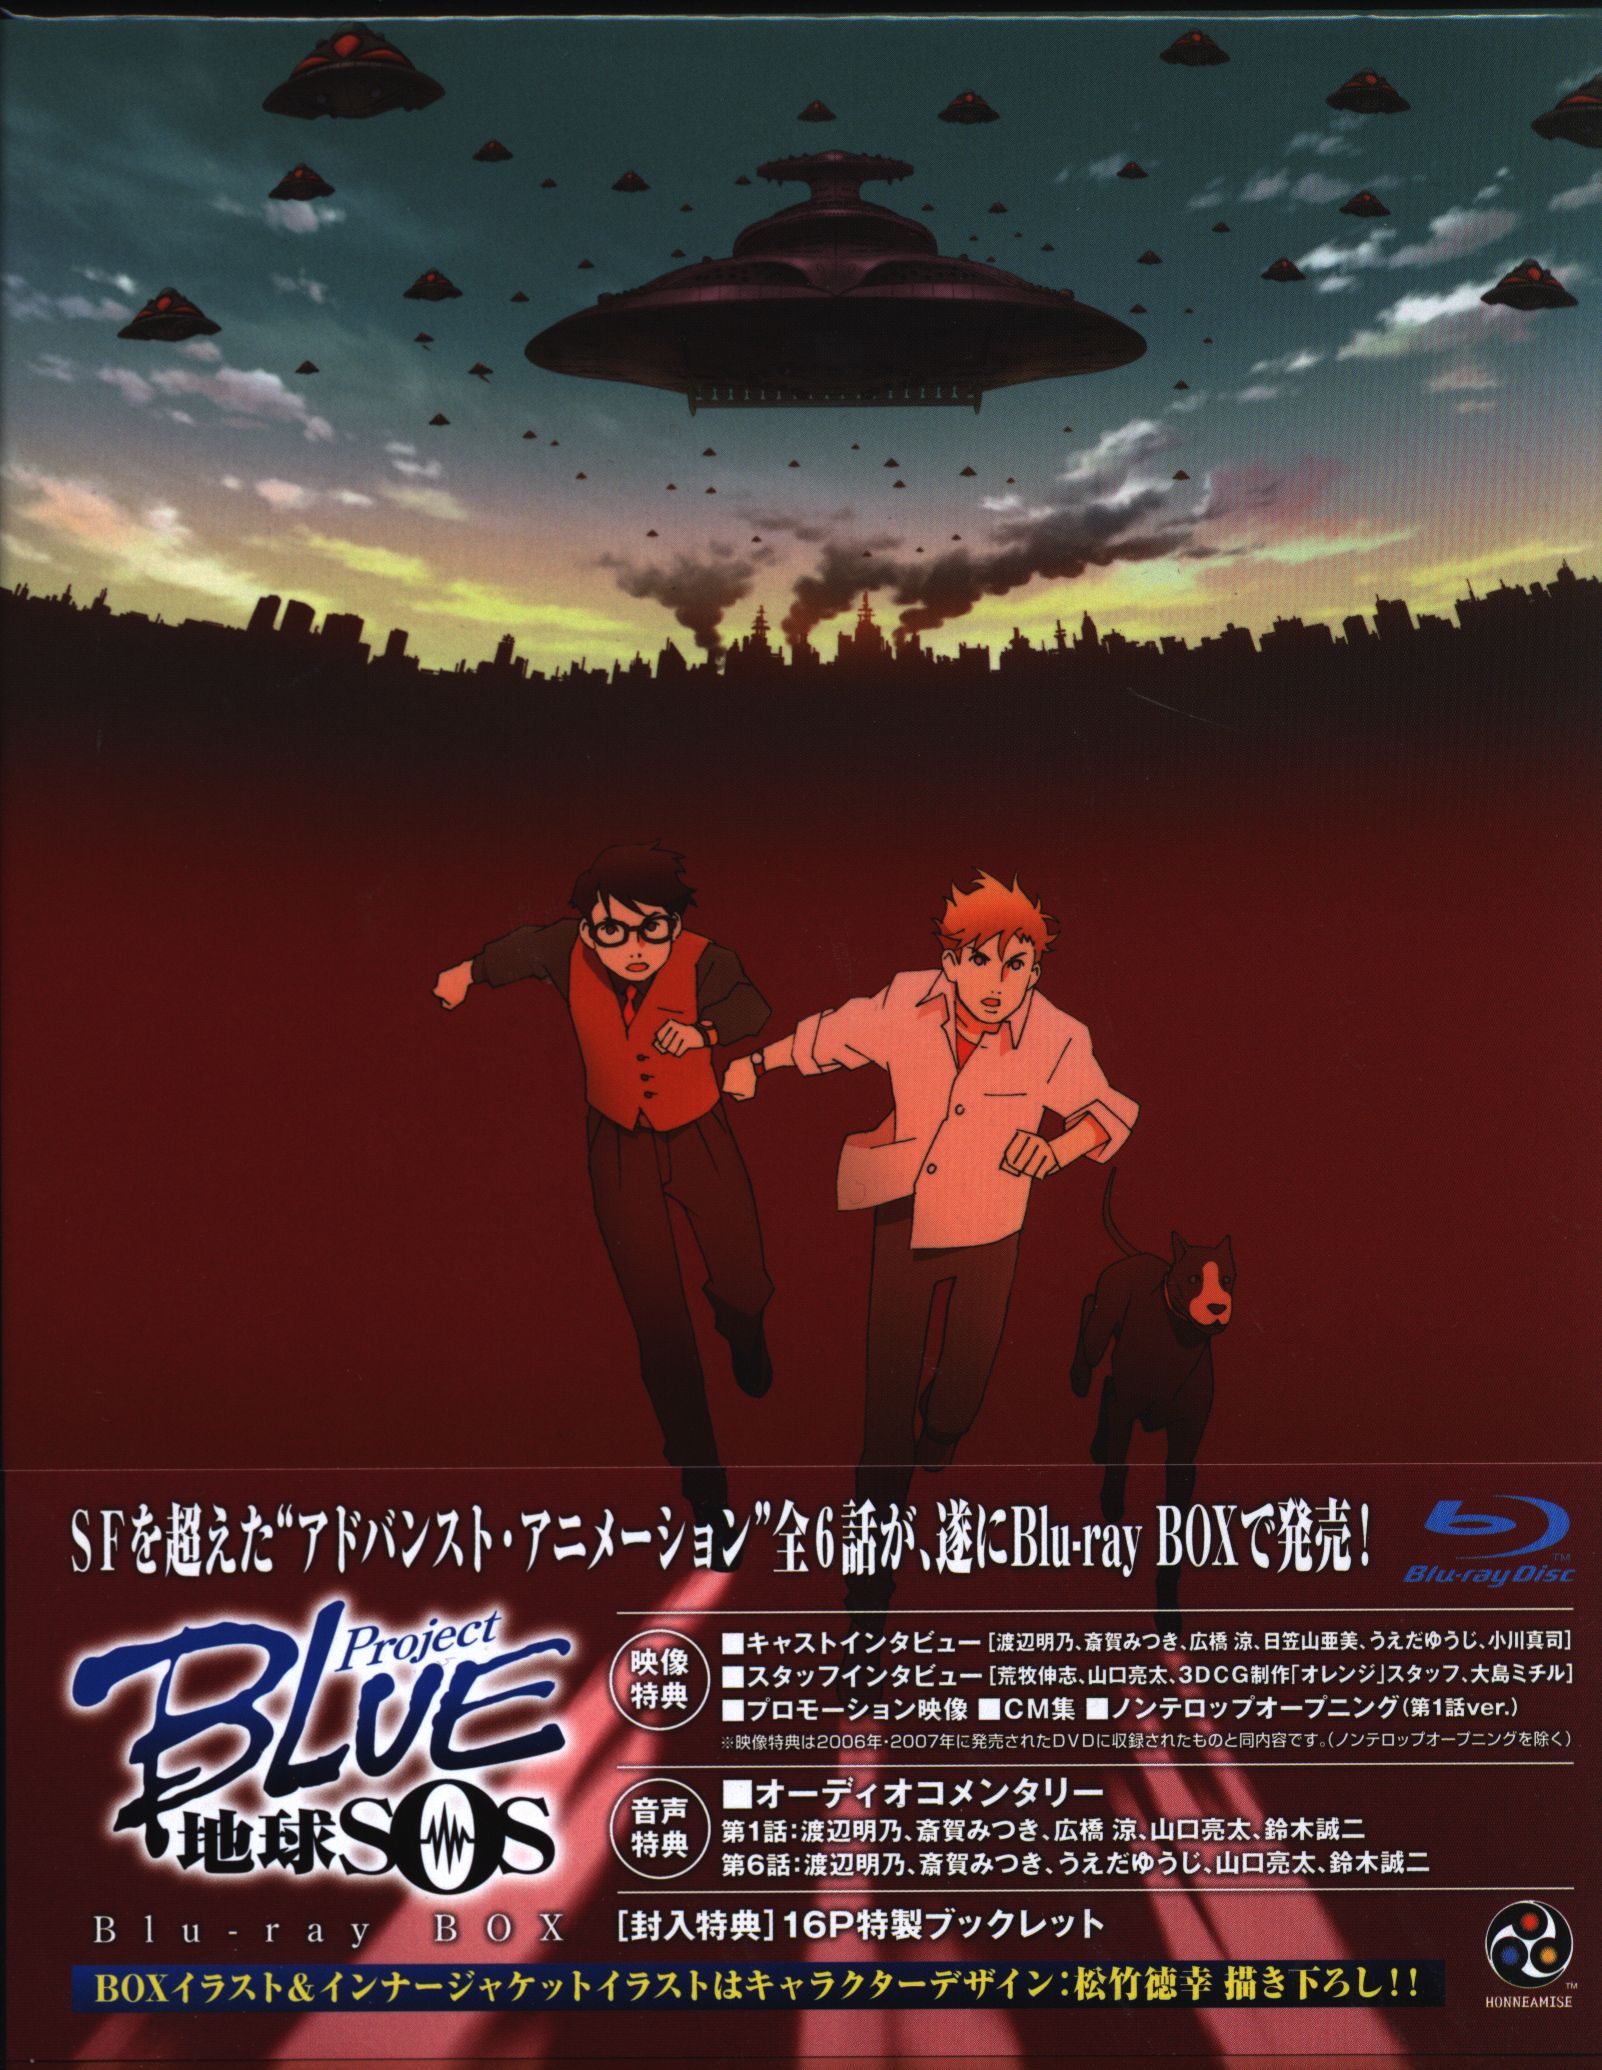 Project BLUE 地球SOS Blu-ray Box g6bh9ry 安住紳一郎アナ - www ...